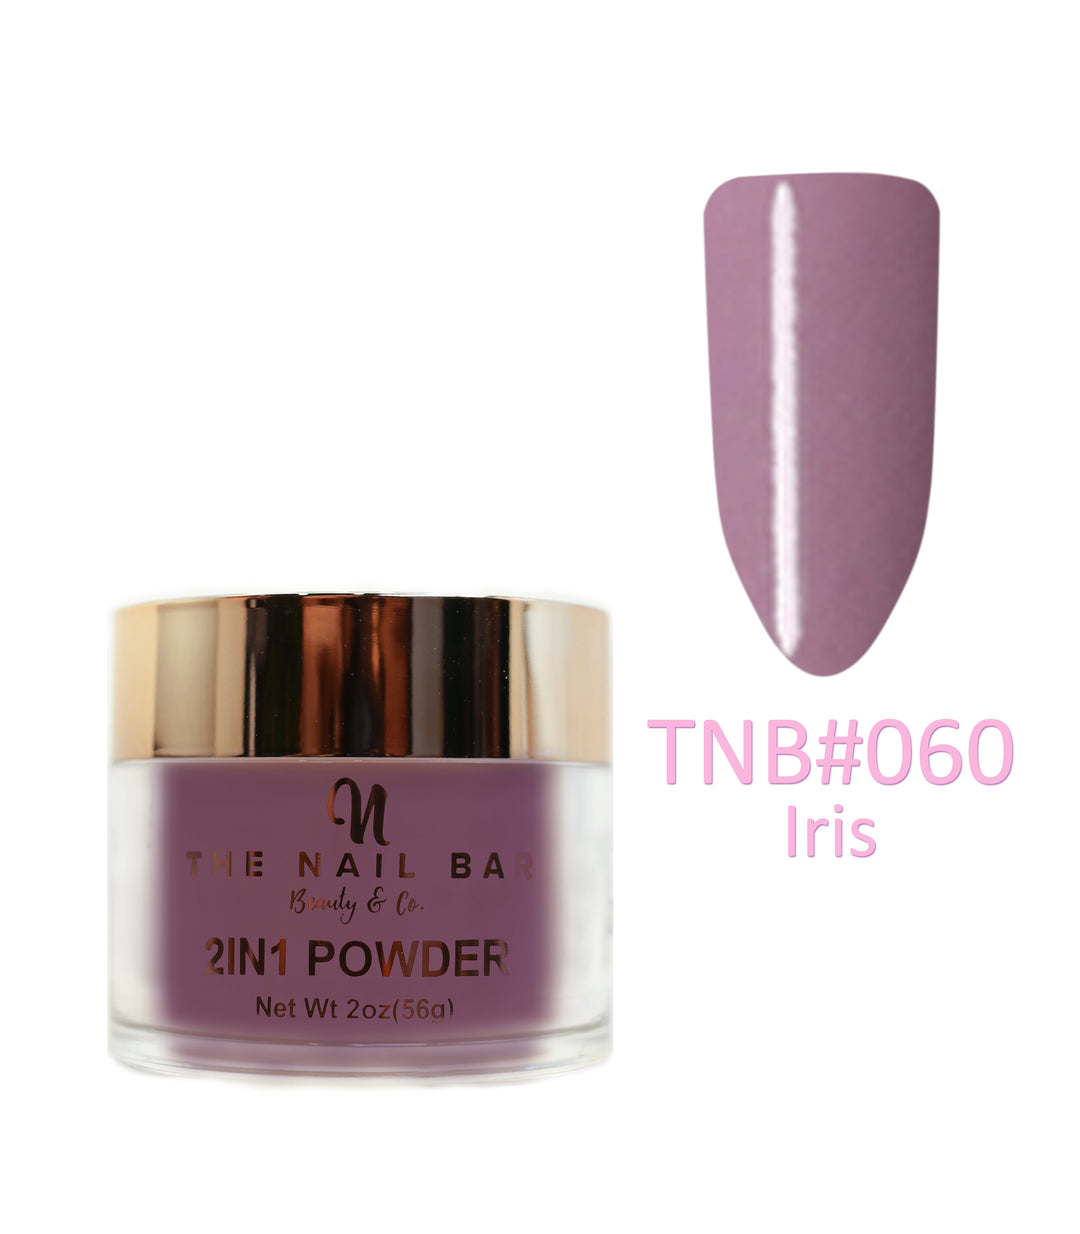 2-In-1 Dipping/Acrylic colour powder (2oz) -Iris - The Nail Bar Beauty & Co.